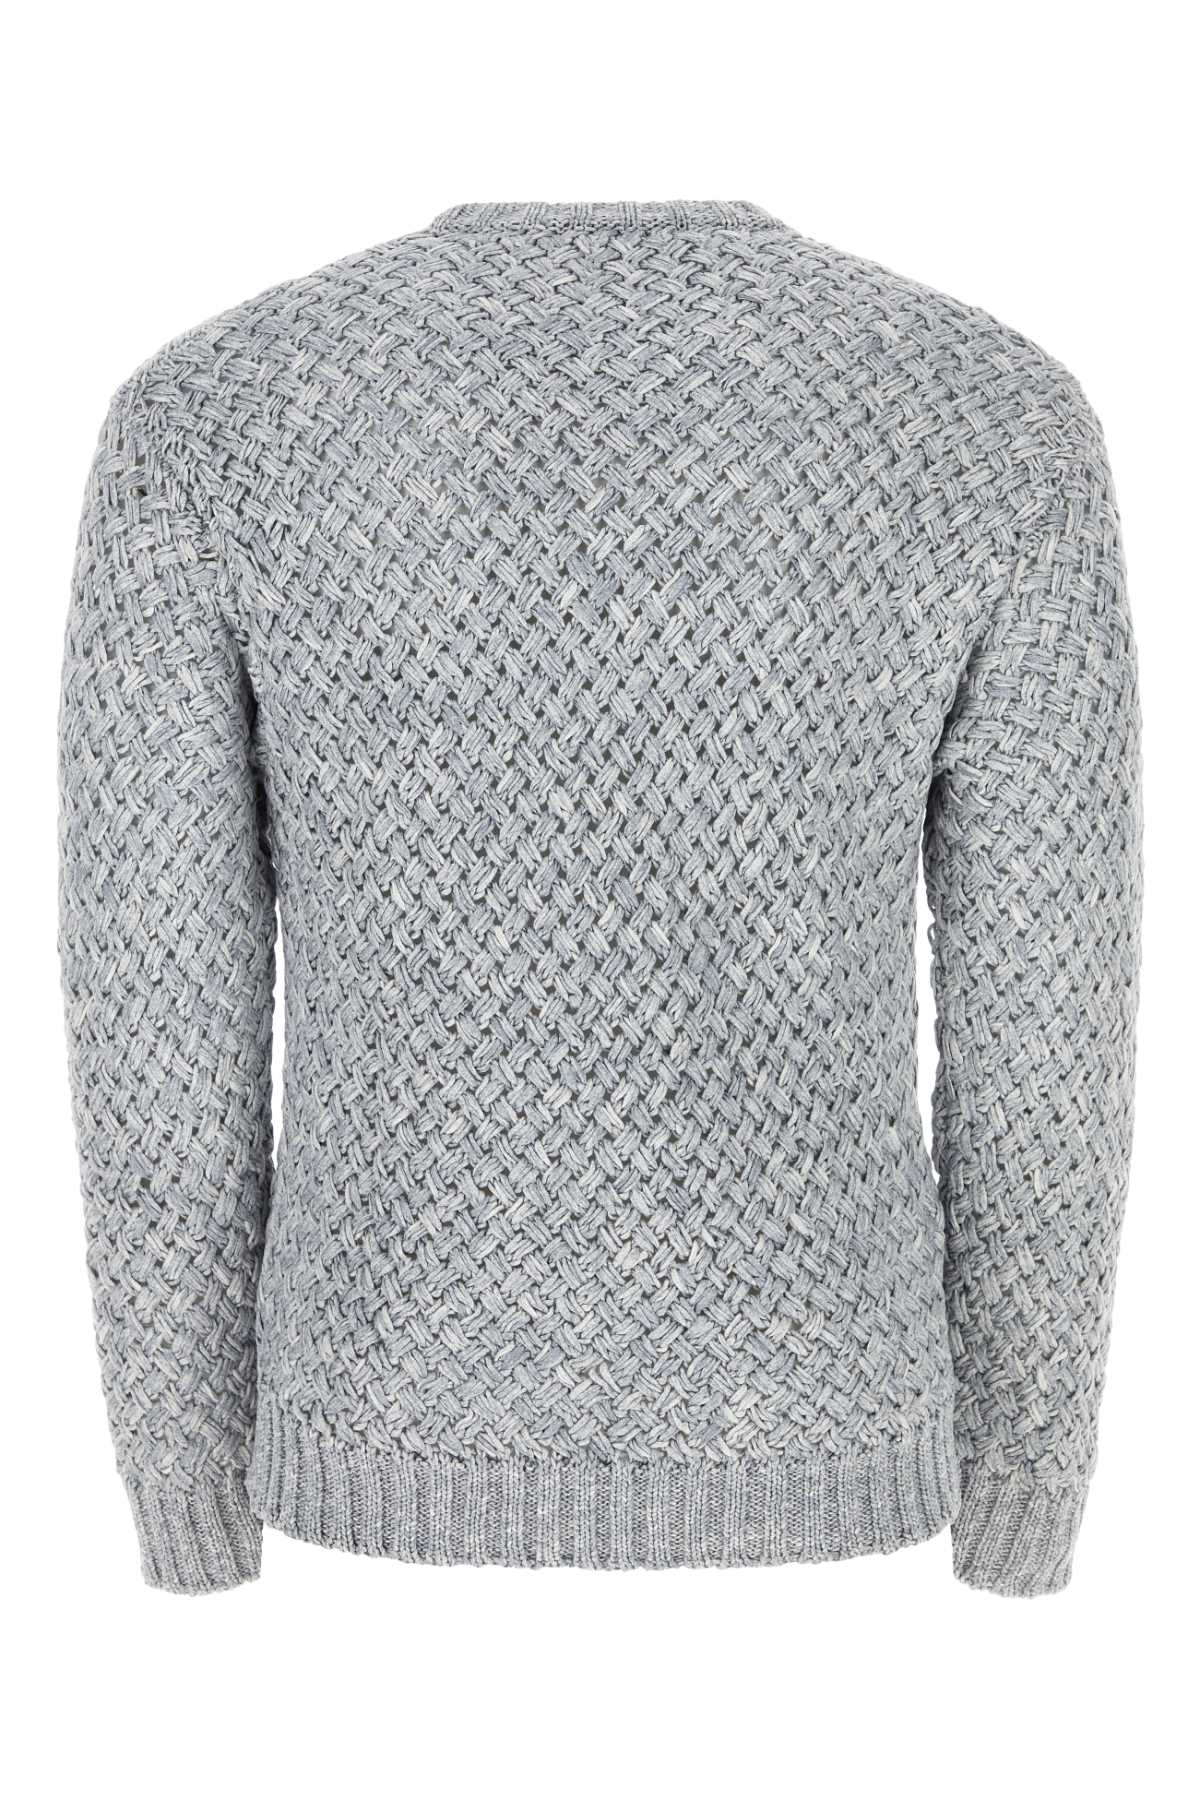 Shop Koché Melange Grey Cotton Sweater